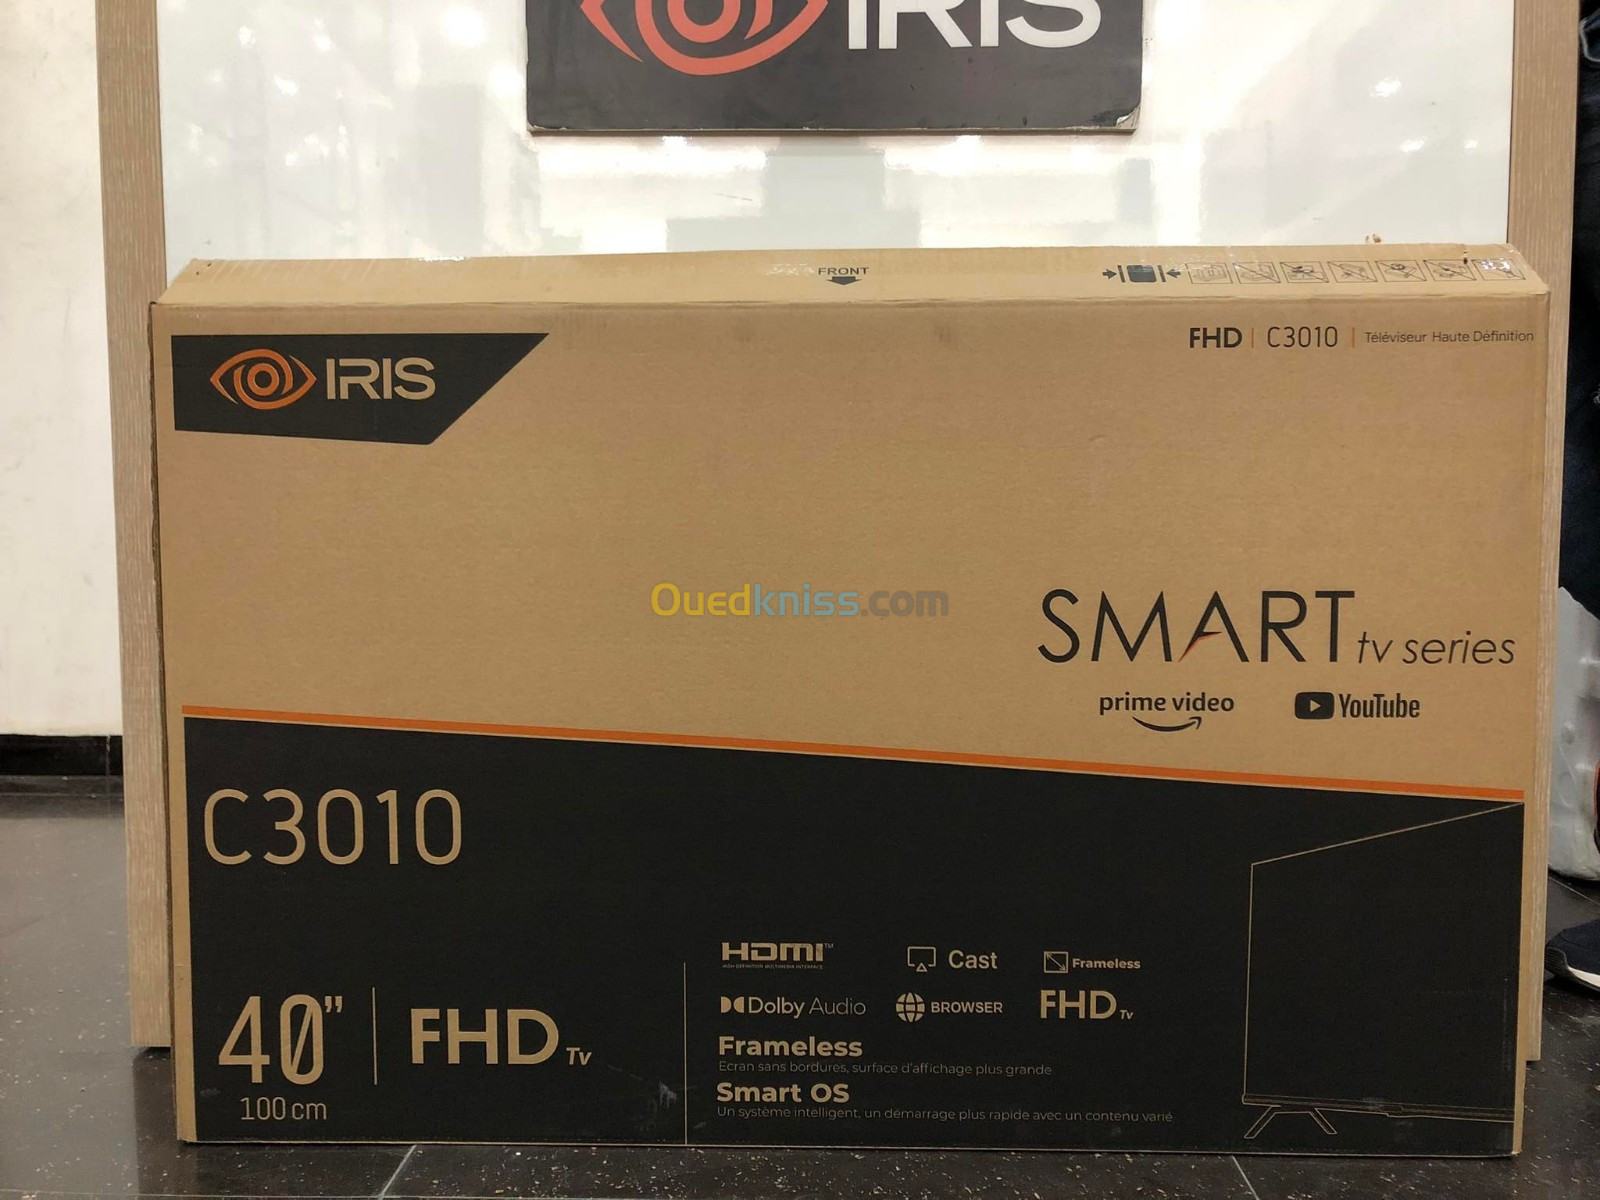 TV IRIS 40 FHD C3010 SMART OS